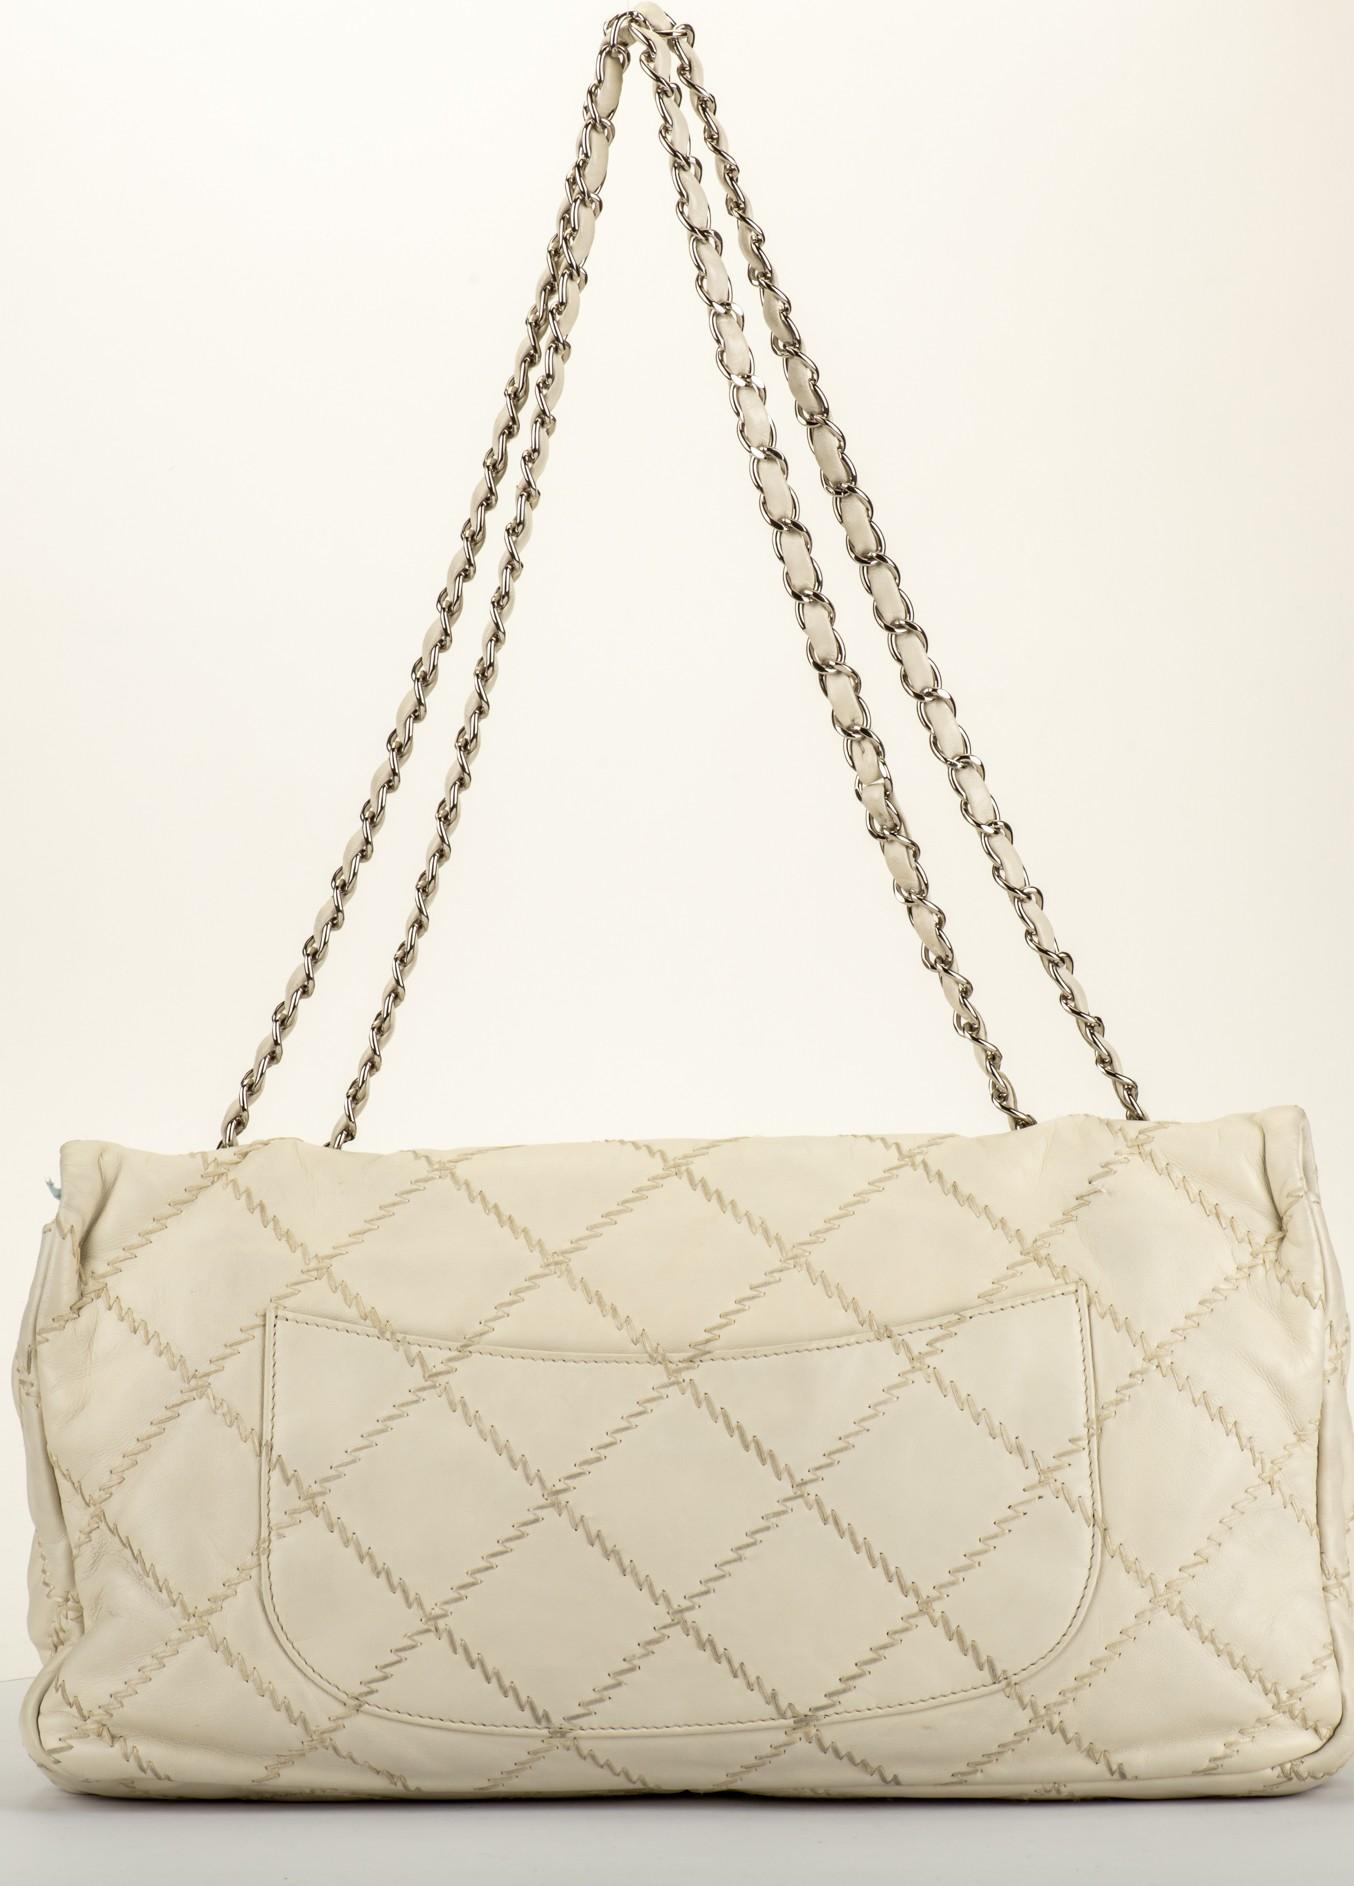 Beige Chanel Cream Stitched Jumbo Flap Bag